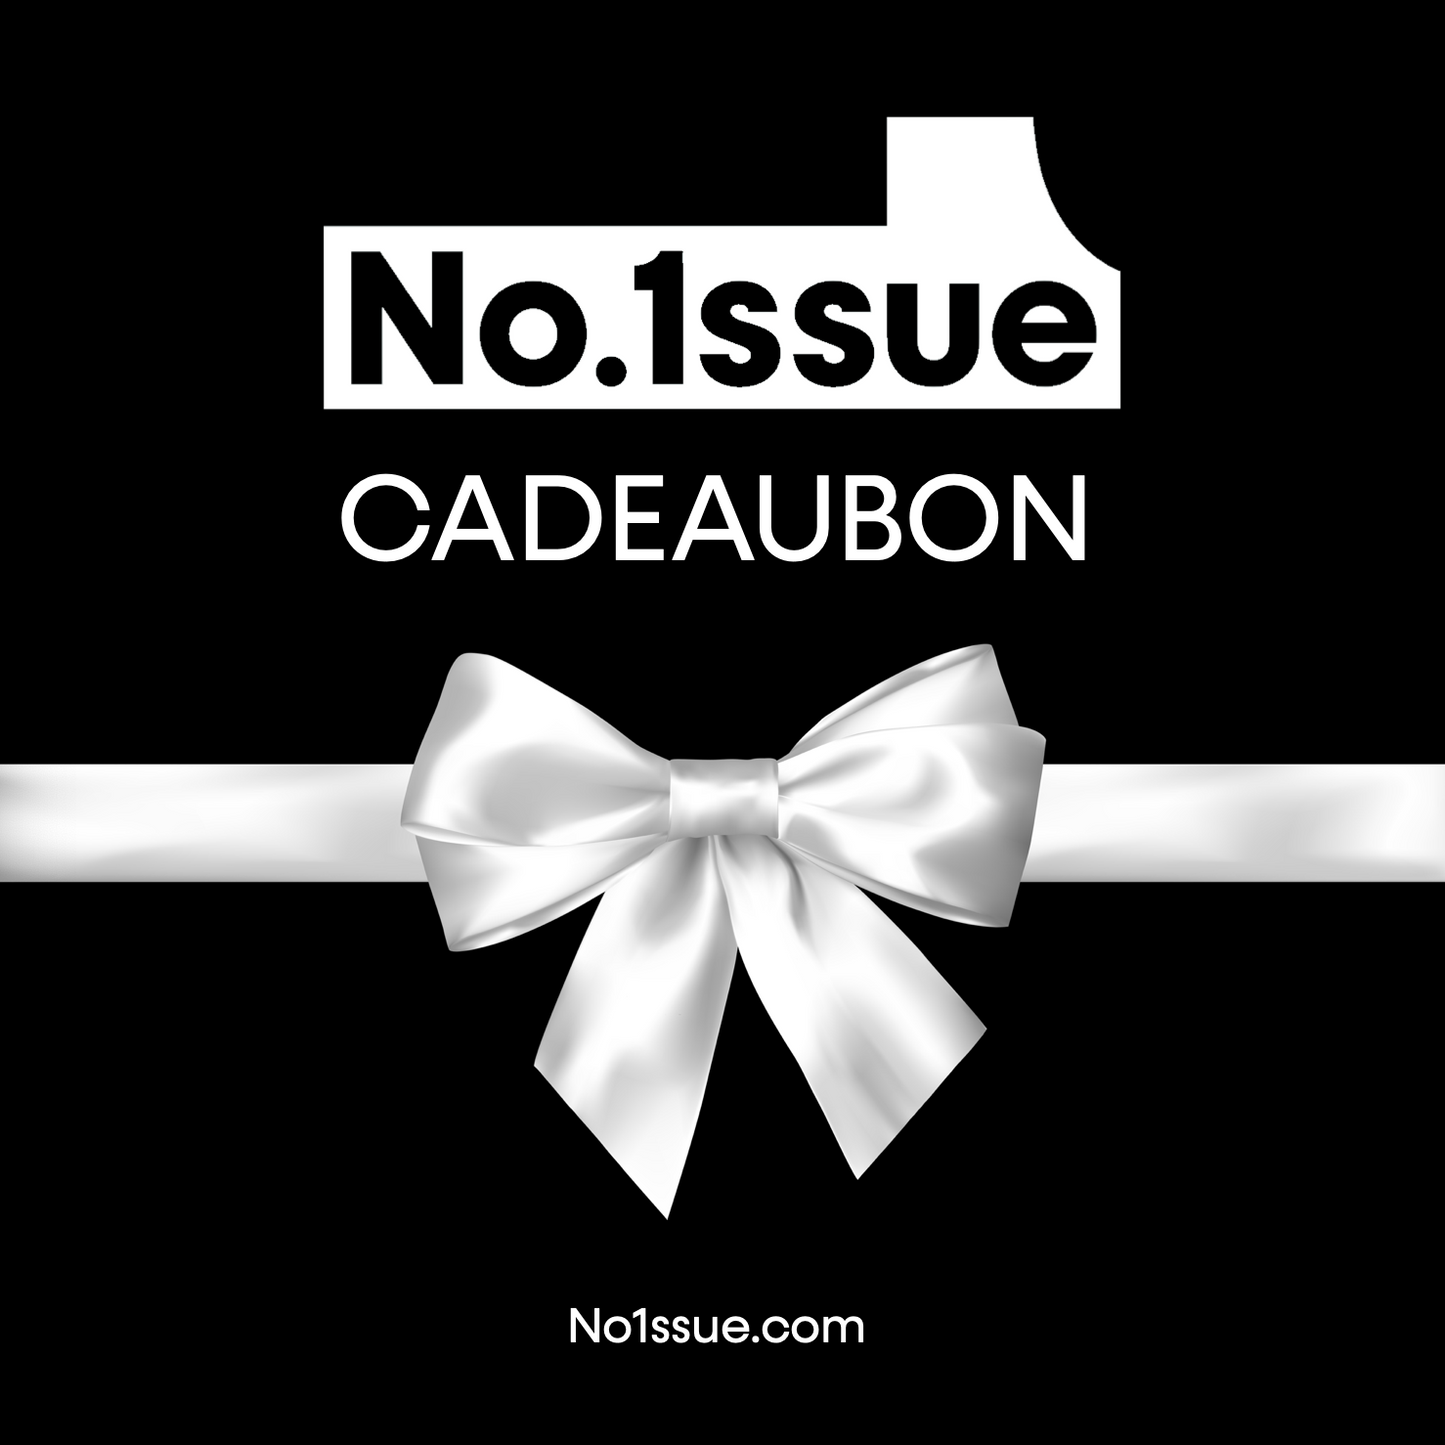 Cadeaubon No.1ssue